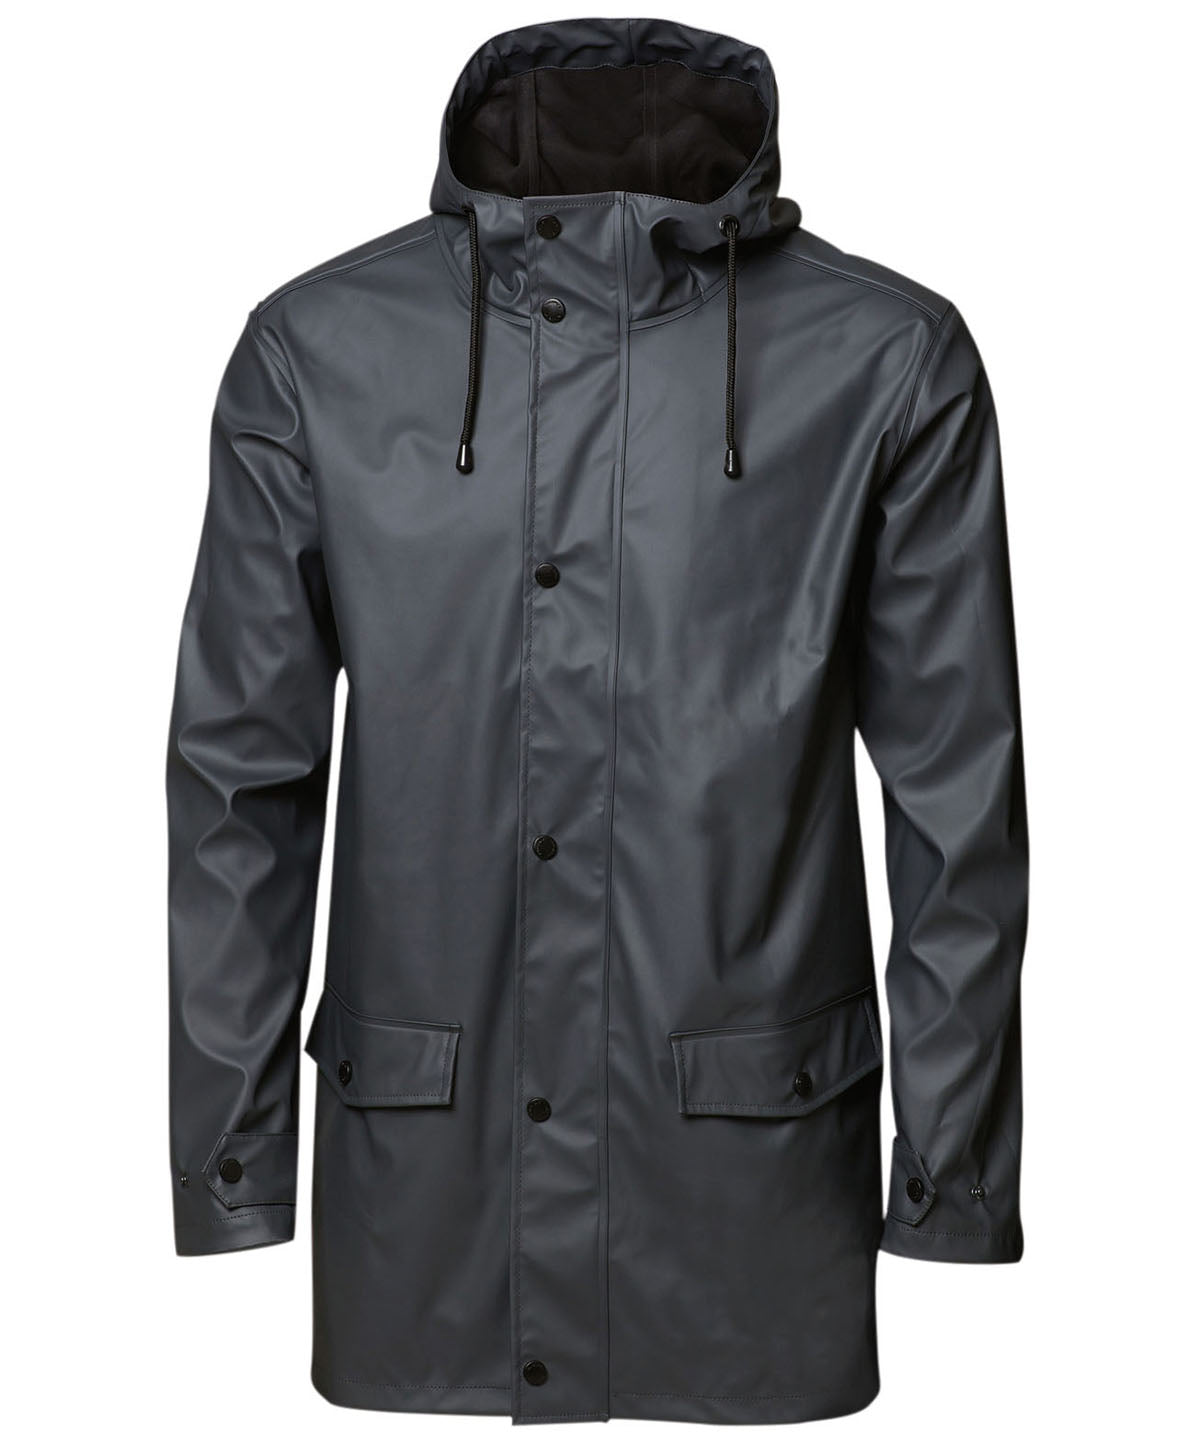 Jakkar - Huntington – Fashionable Raincoat